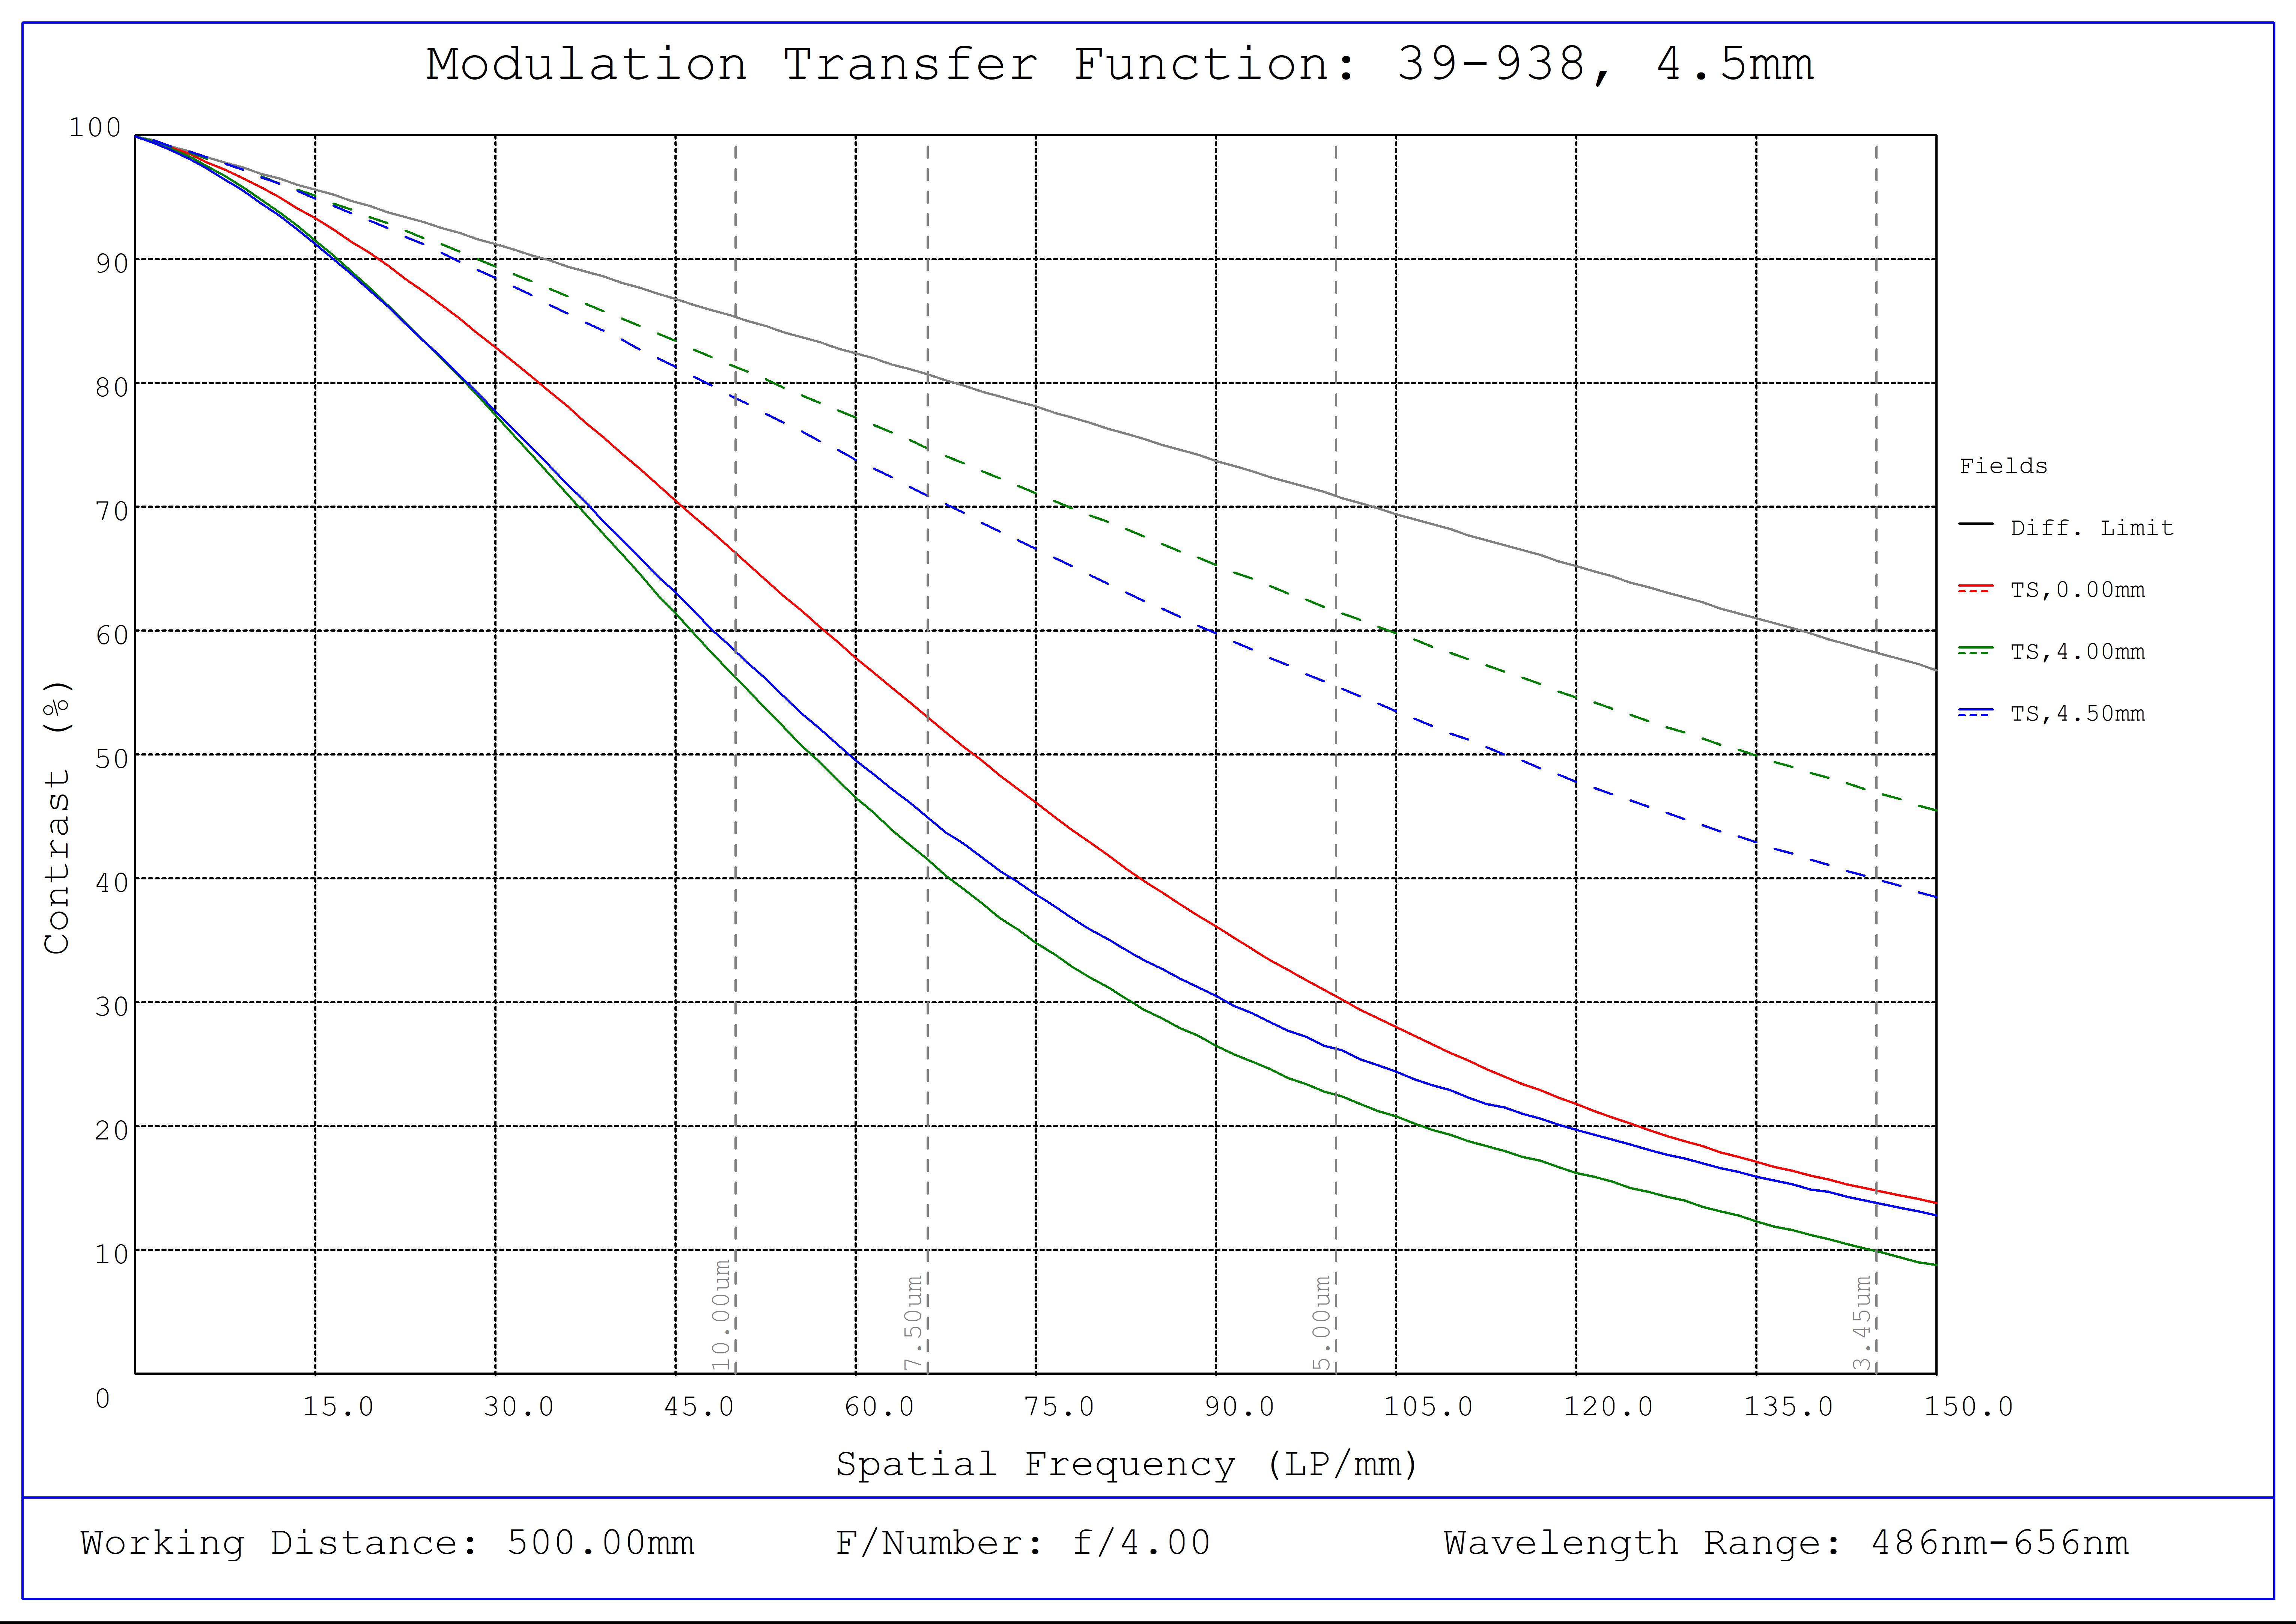 #39-938, 4.5mm C VIS-NIR Series Fixed Focal Length Lens, Modulated Transfer Function (MTF) Plot, 500mm Working Distance, f4